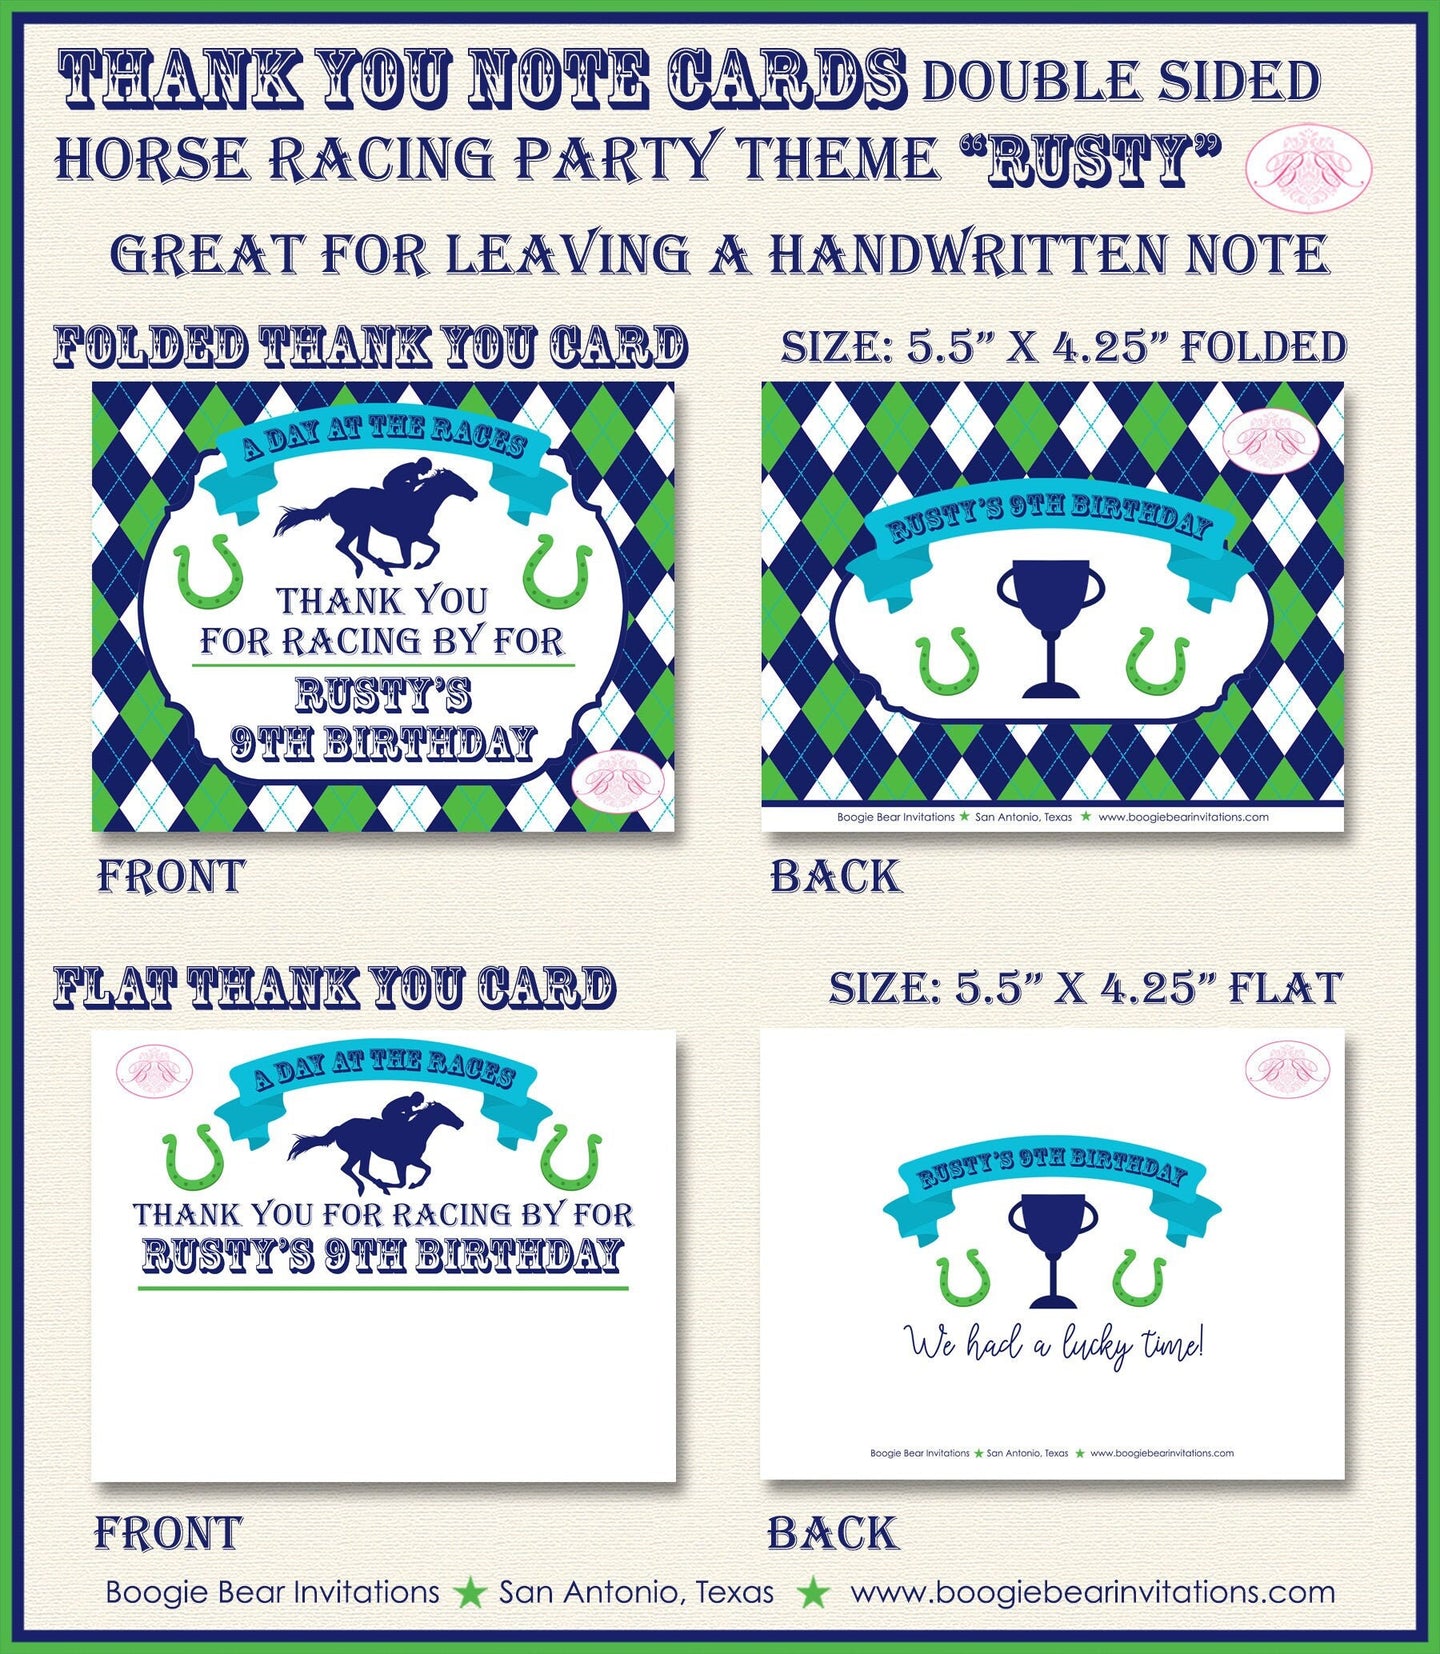 Horse Racing Birthday Party Thank You Card Argyle Green Blue Kentucky Derby Race Lucky Jockey Boogie Bear Invitations Rusty Theme Printed